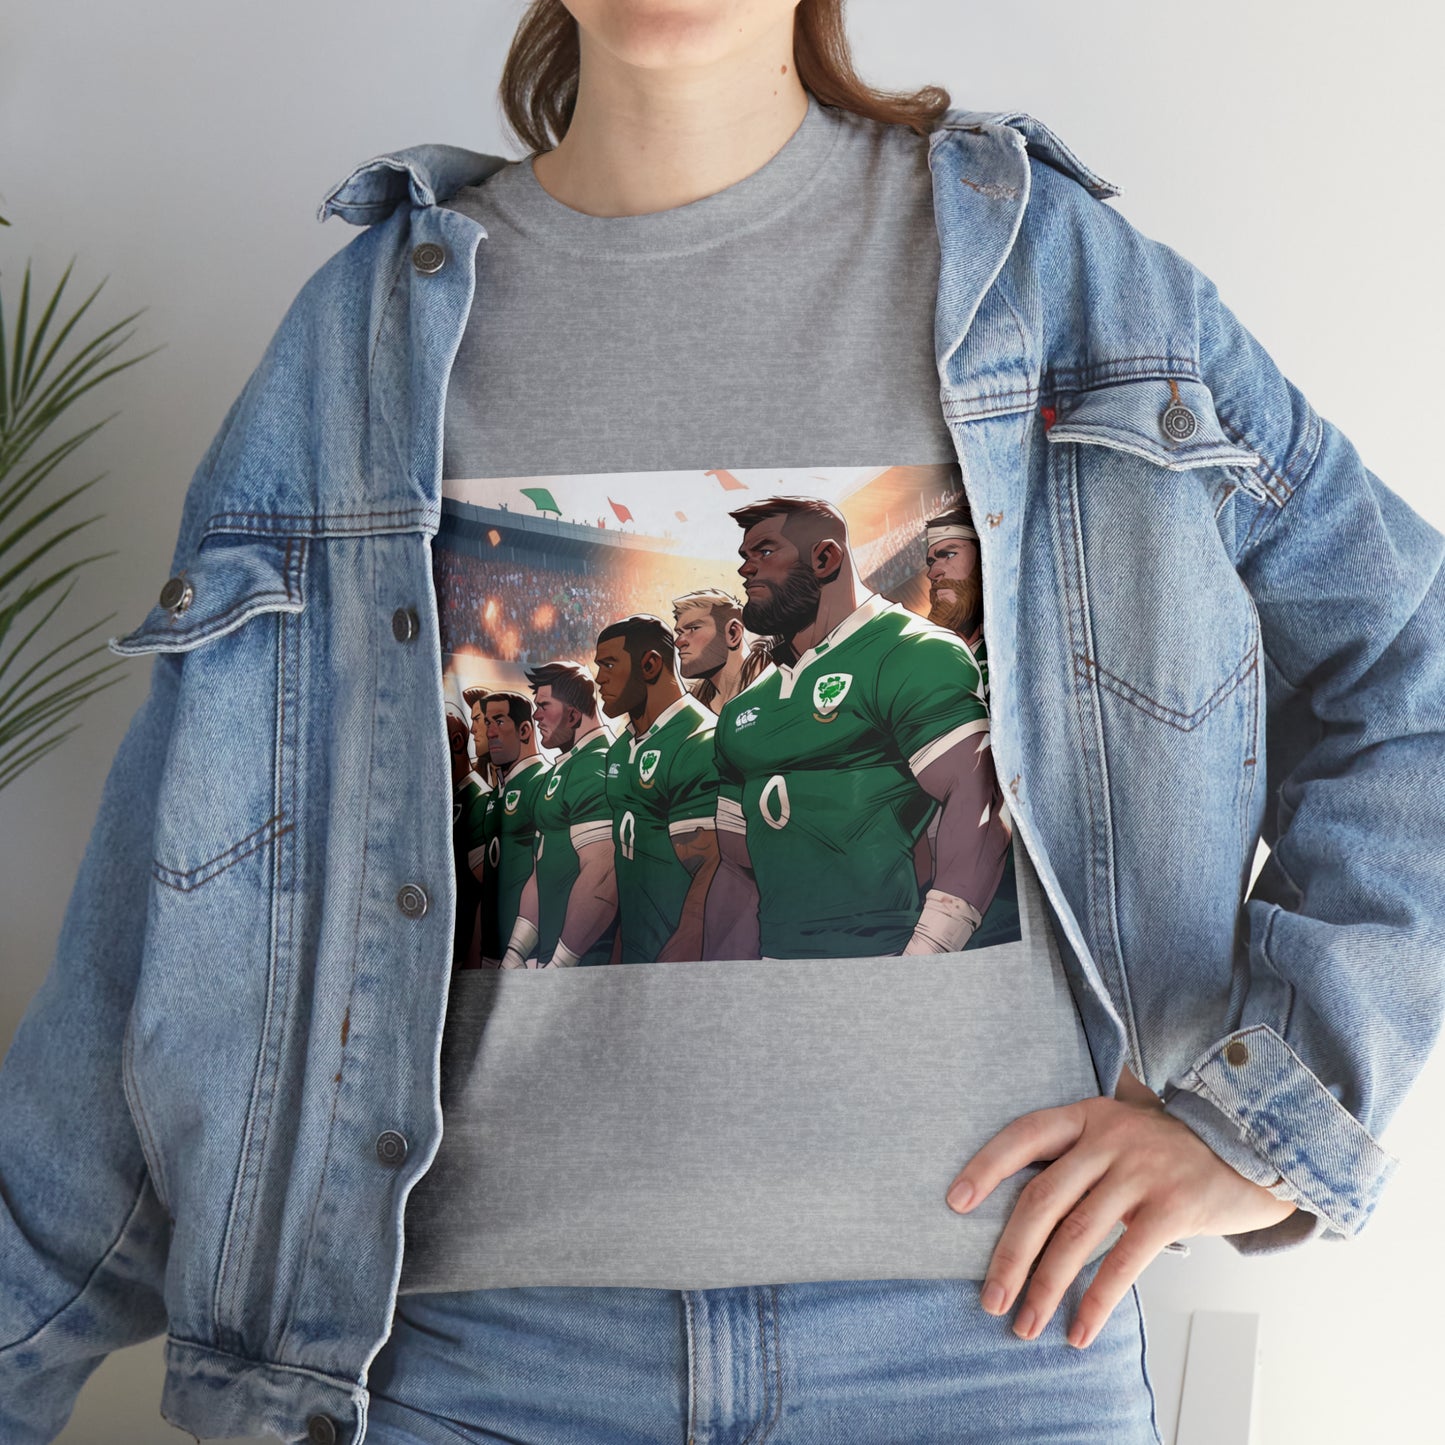 Ready Ireland - light shirts